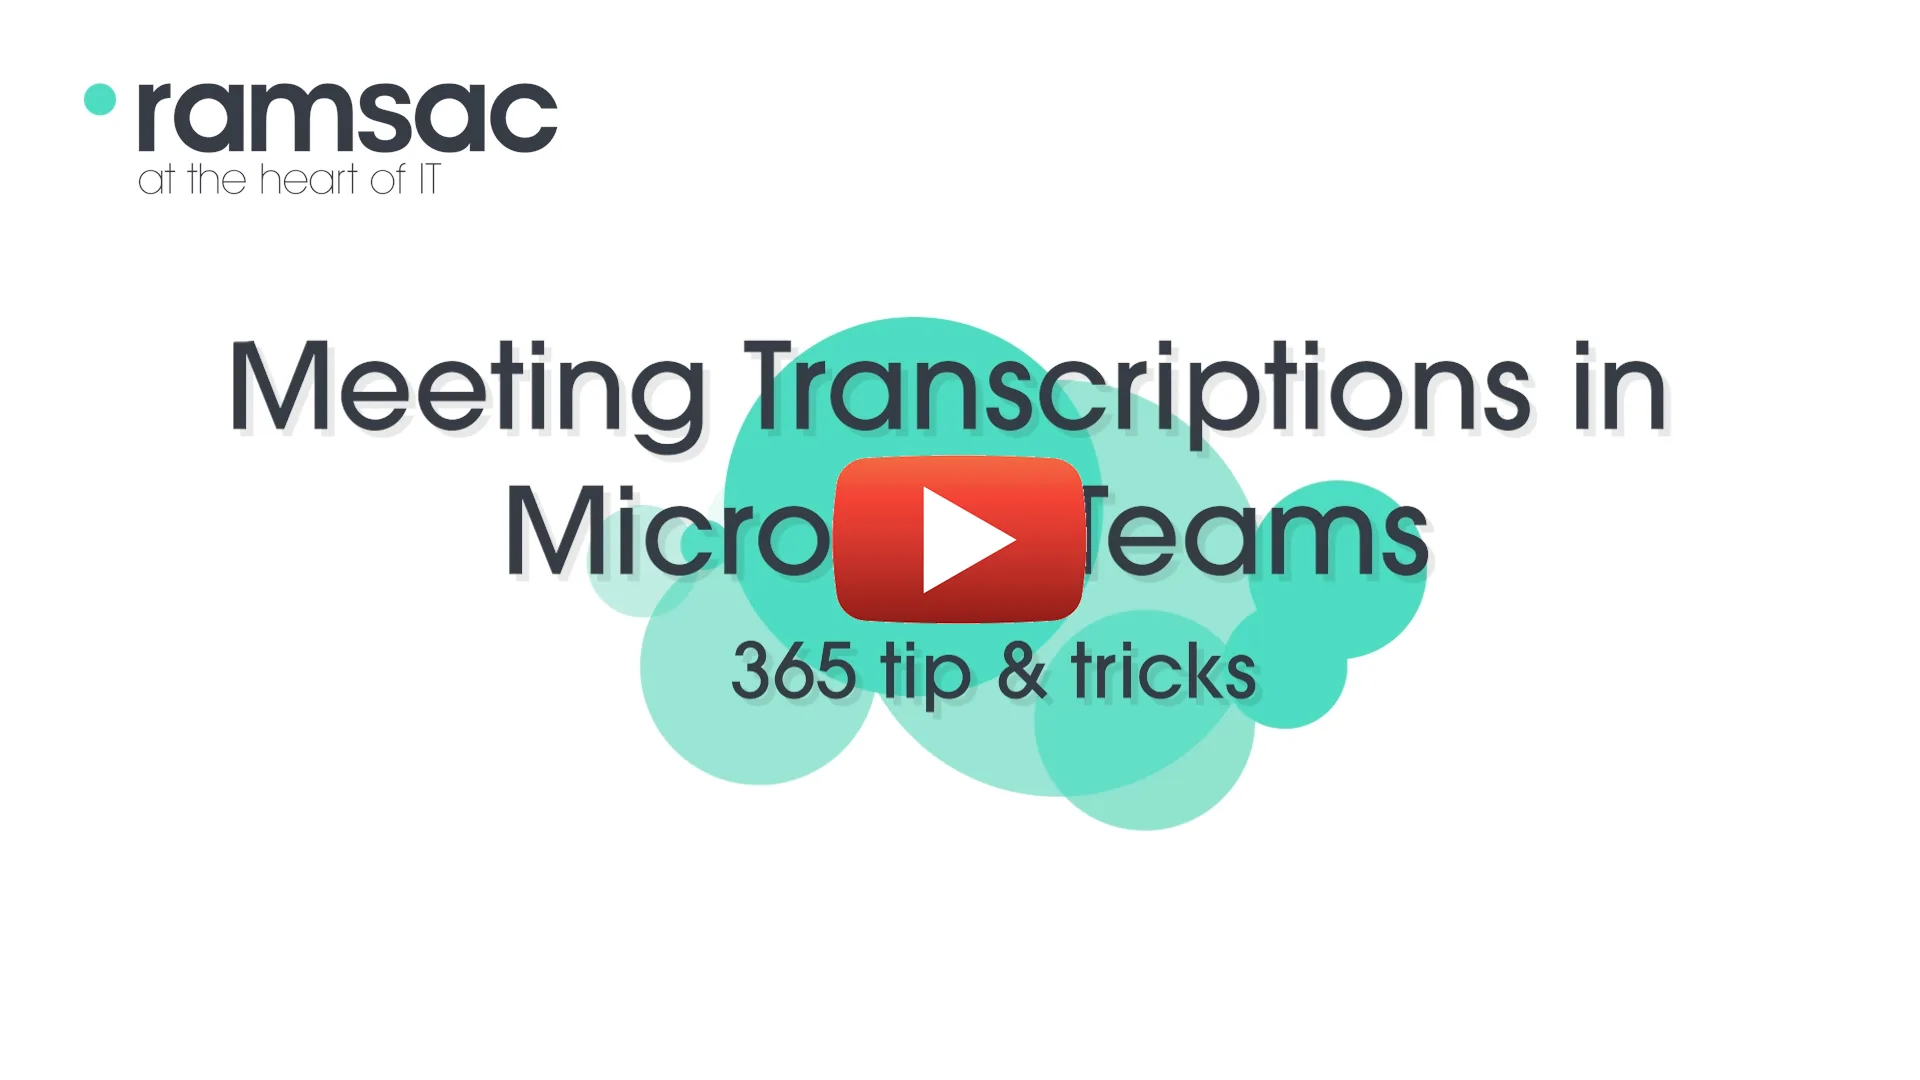 ramsac Meeting transcription in teams blog play